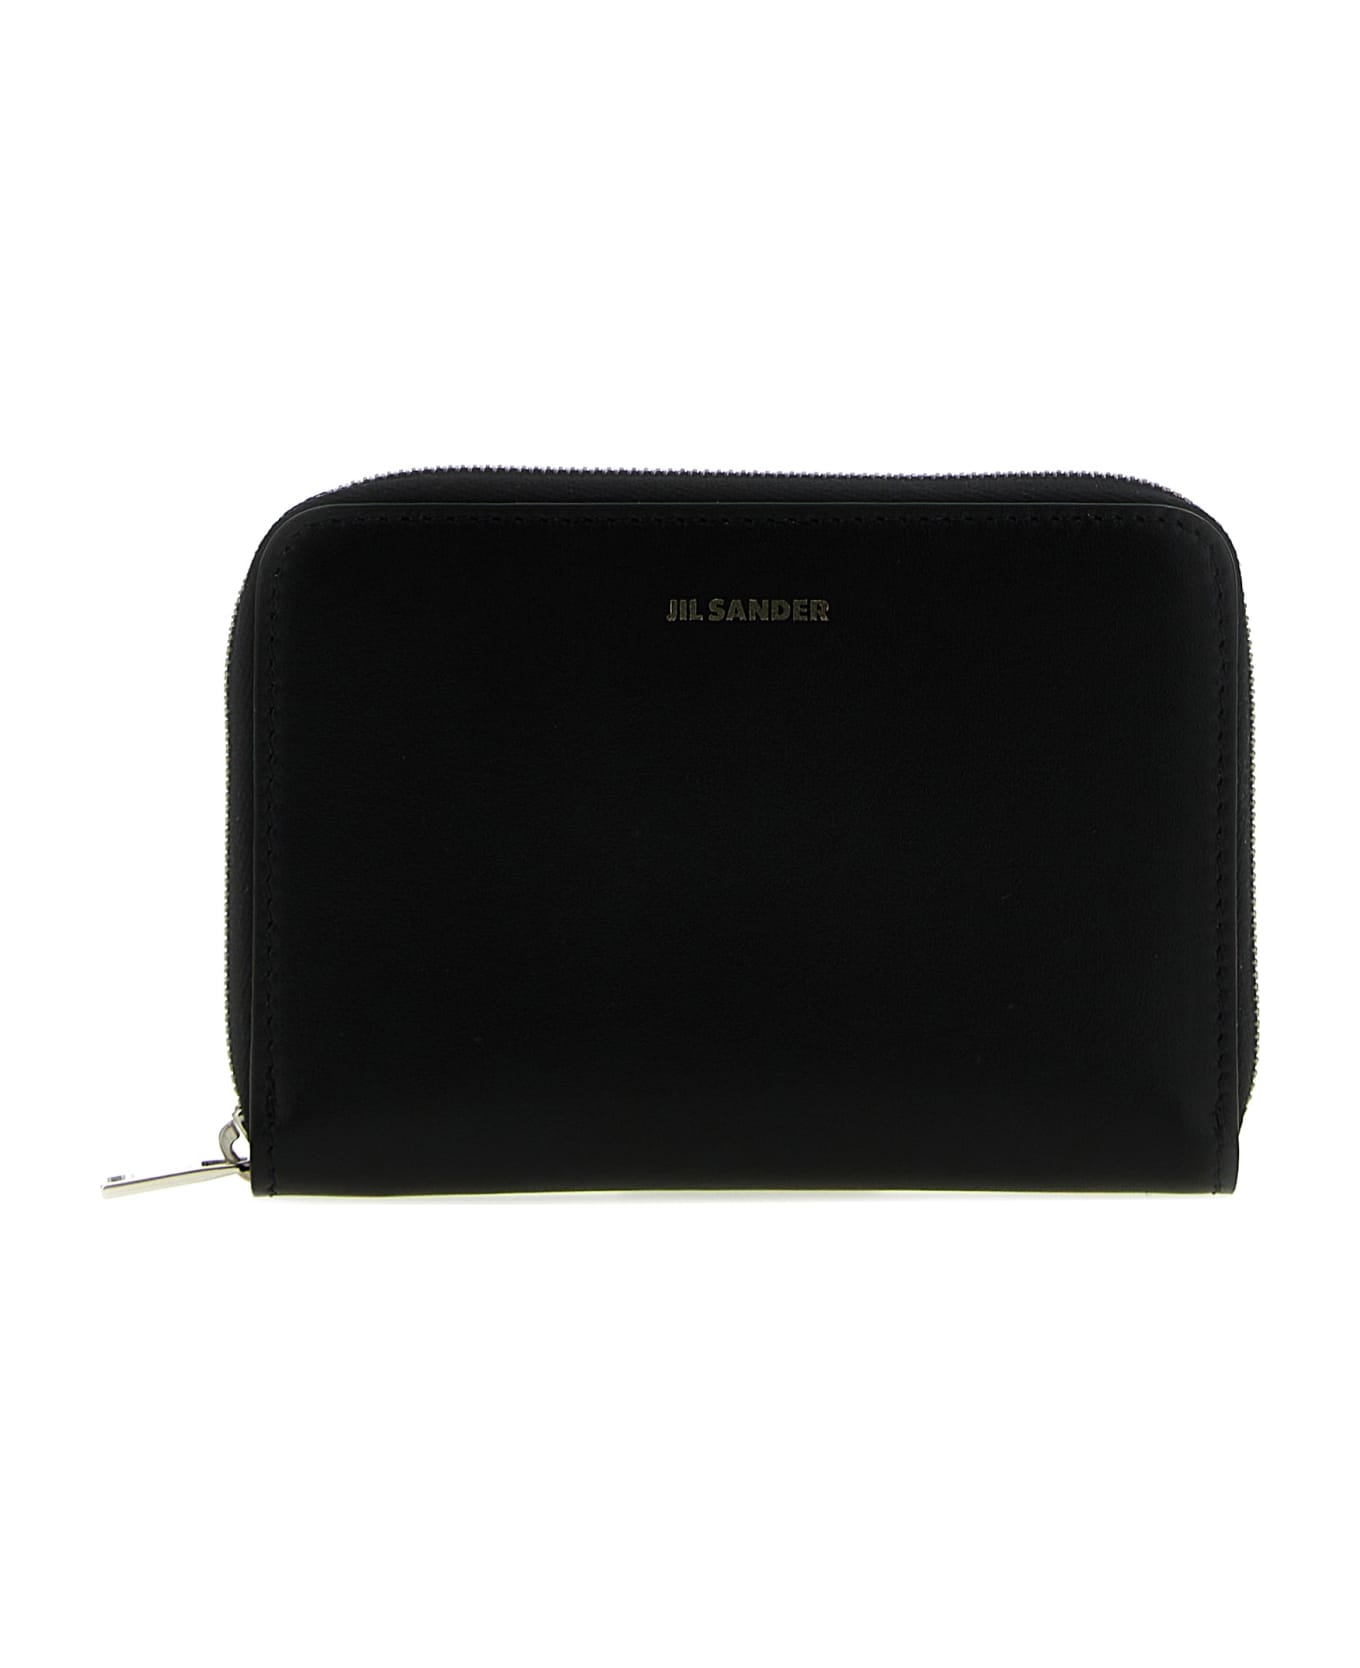 Jil Sander Zip Leather Wallet - Black   財布